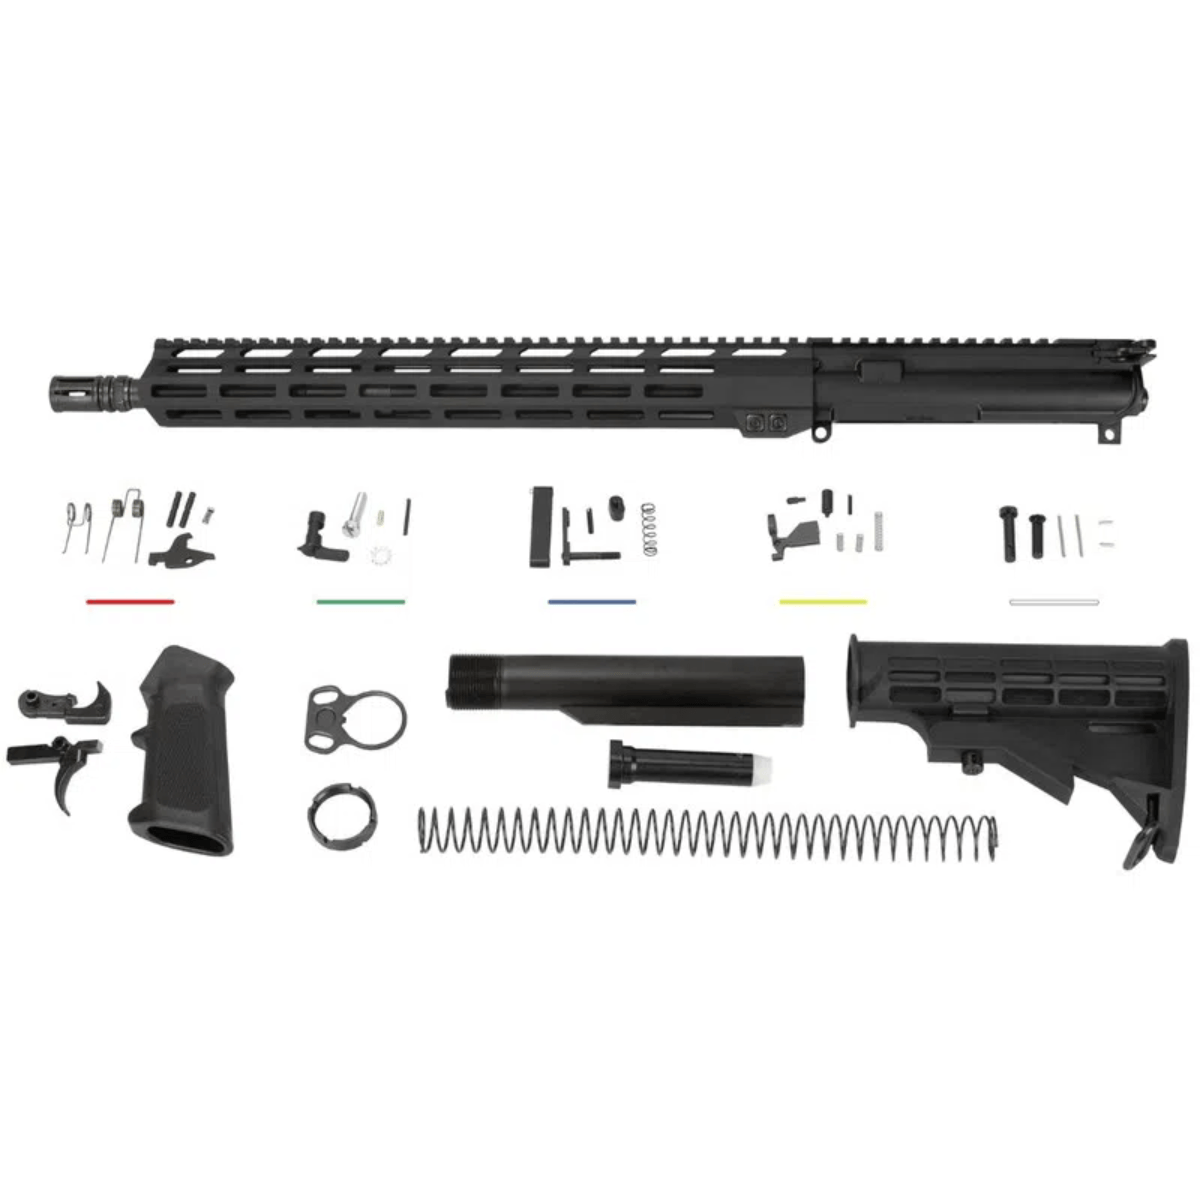 AIM Sports Mil-Spec Complete AR15 Rifle Kit - Bobwards.com